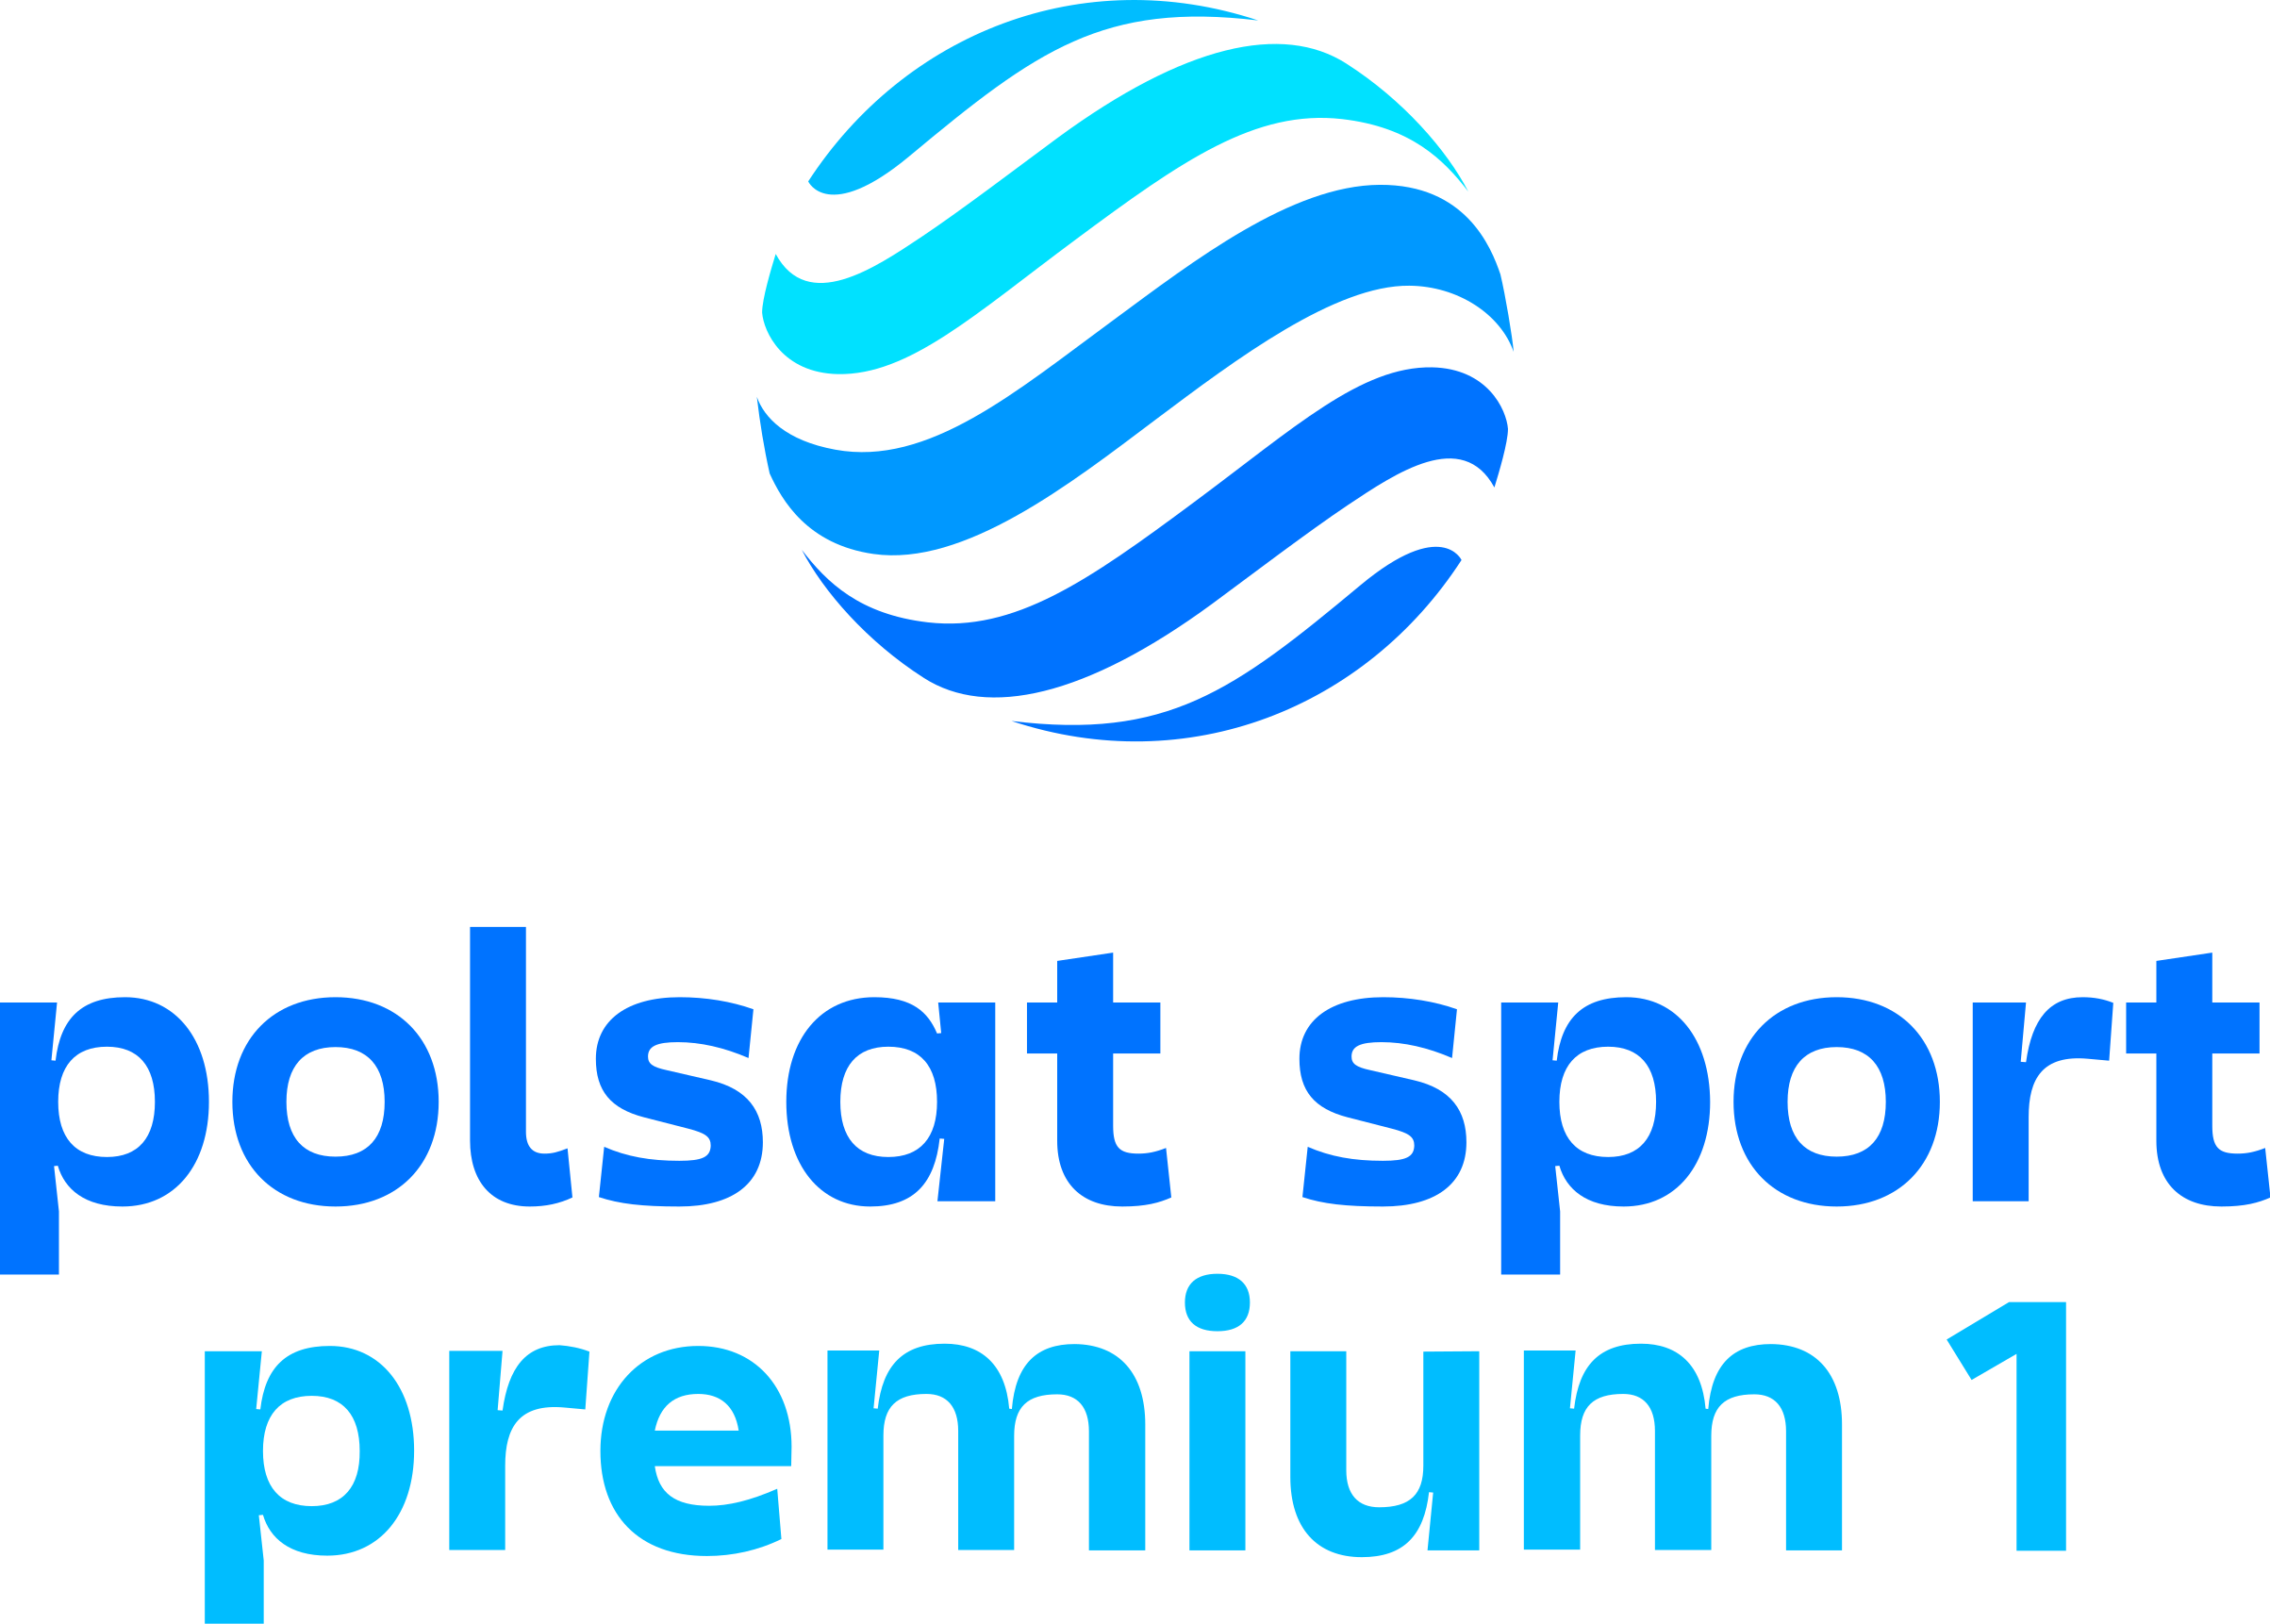 Polsat Sport Premium 1 Mihsign Vision Fandom